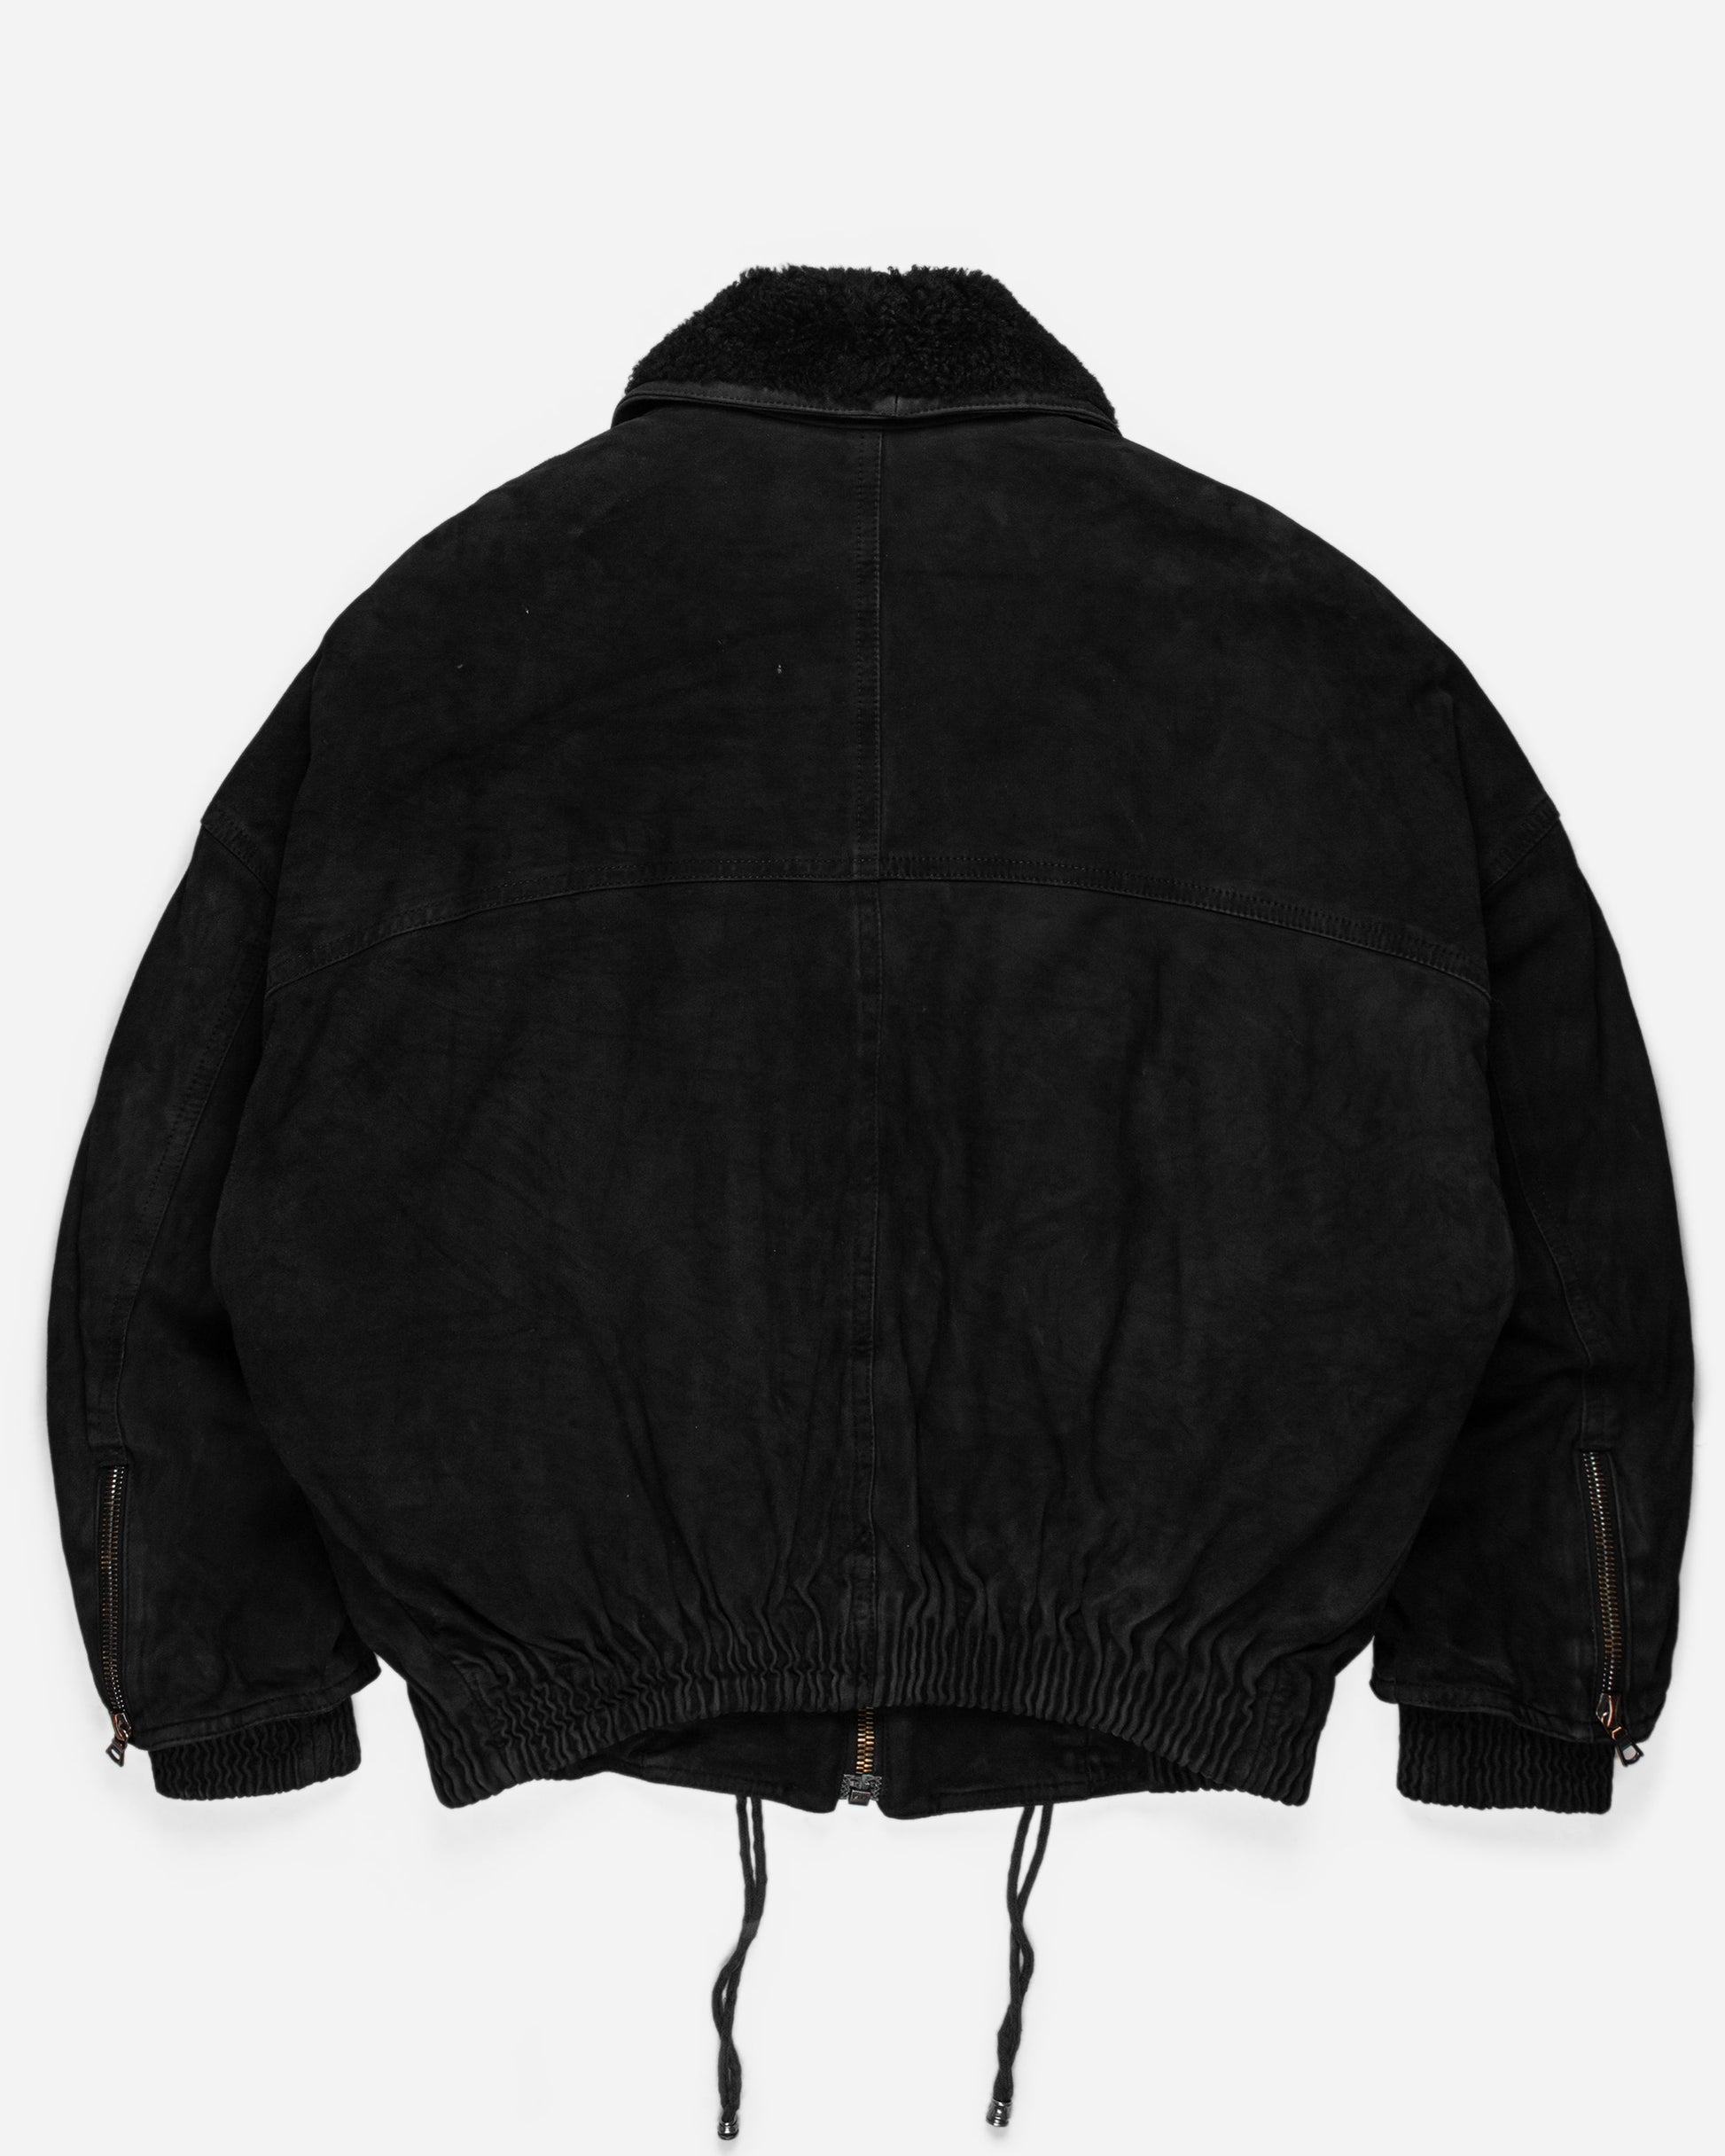 Gianni Versace Suede Multi-zip Bomber Jacket - 1980s - SILVER LEAGUE